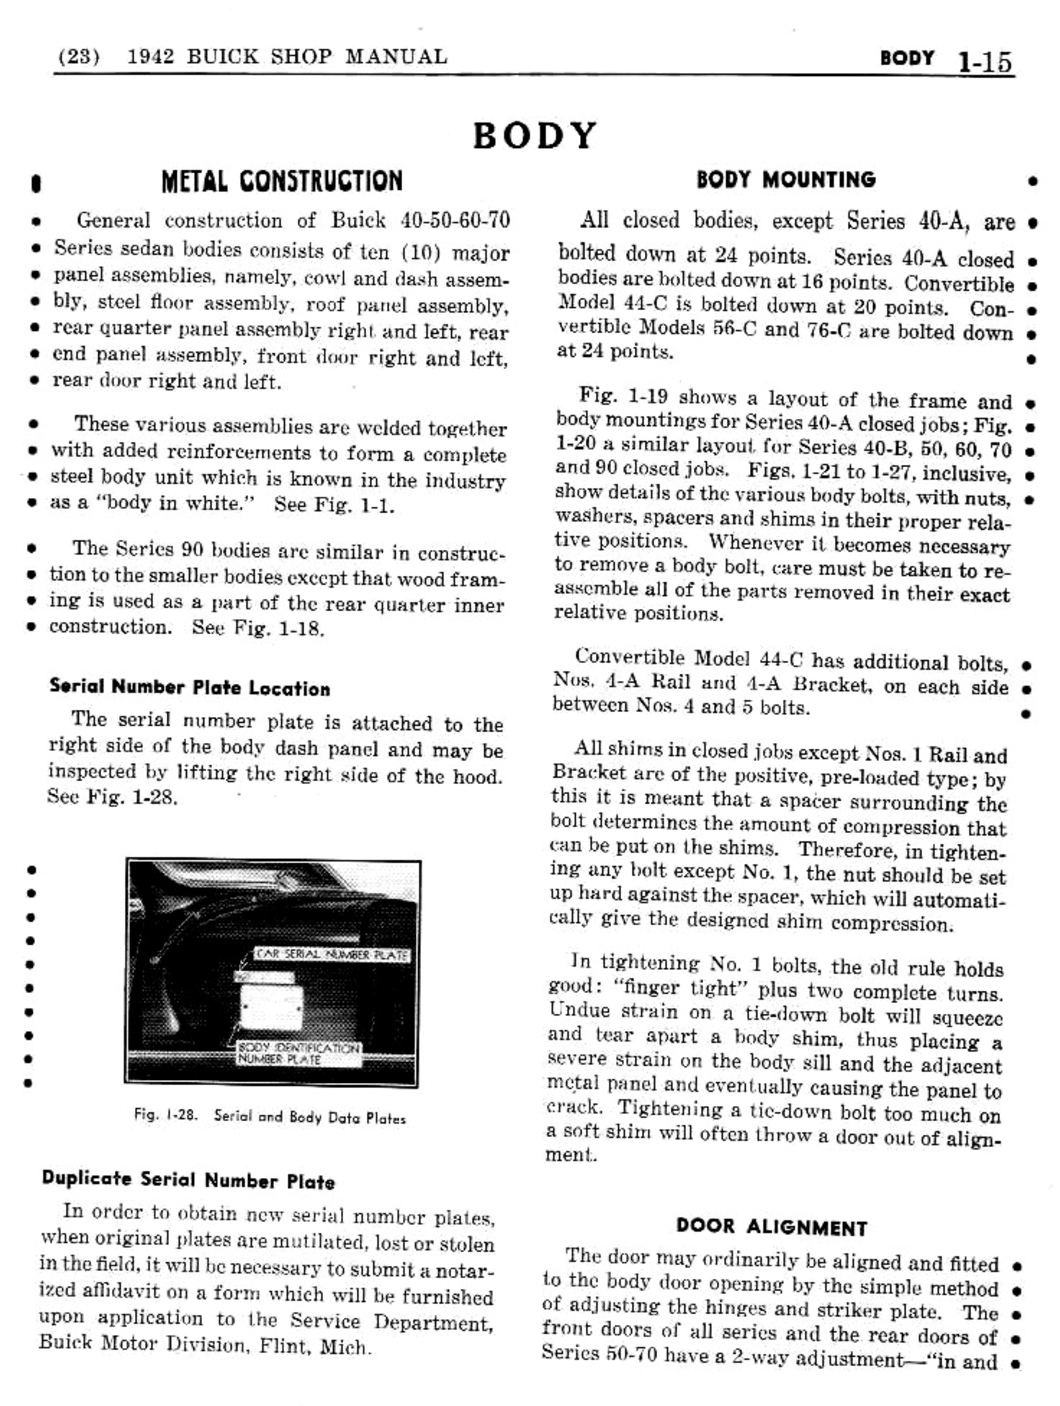 n_02 1942 Buick Shop Manual - Body-015-015.jpg